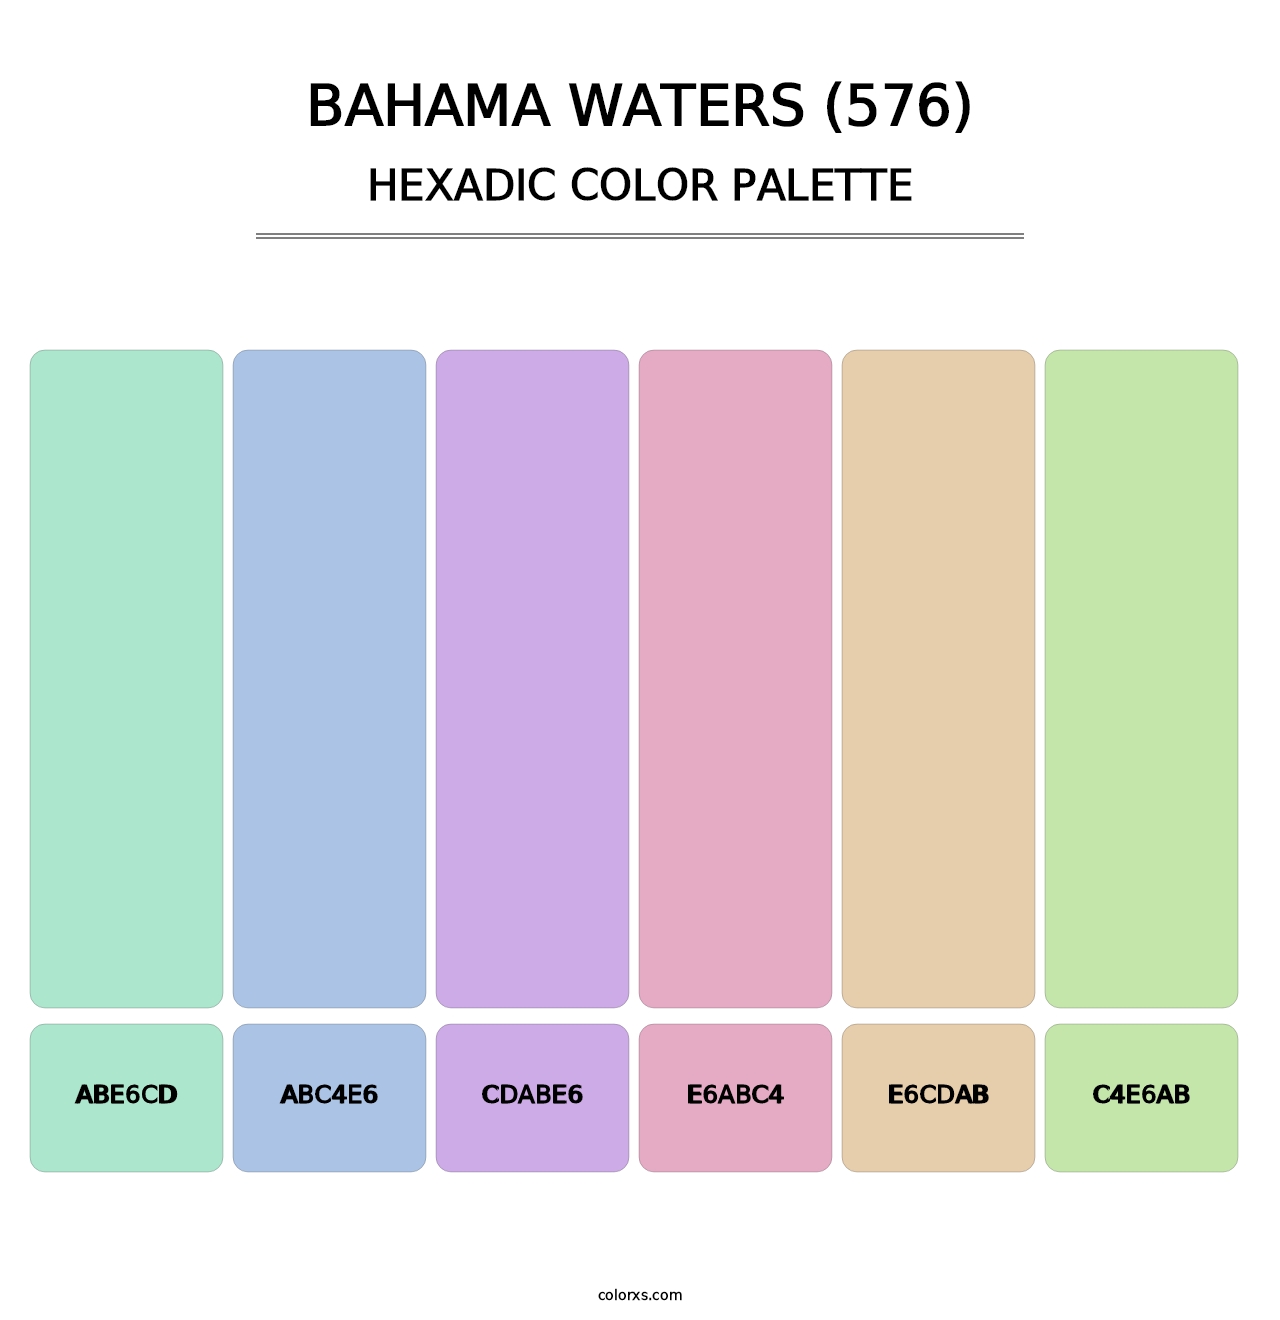 Bahama Waters (576) - Hexadic Color Palette